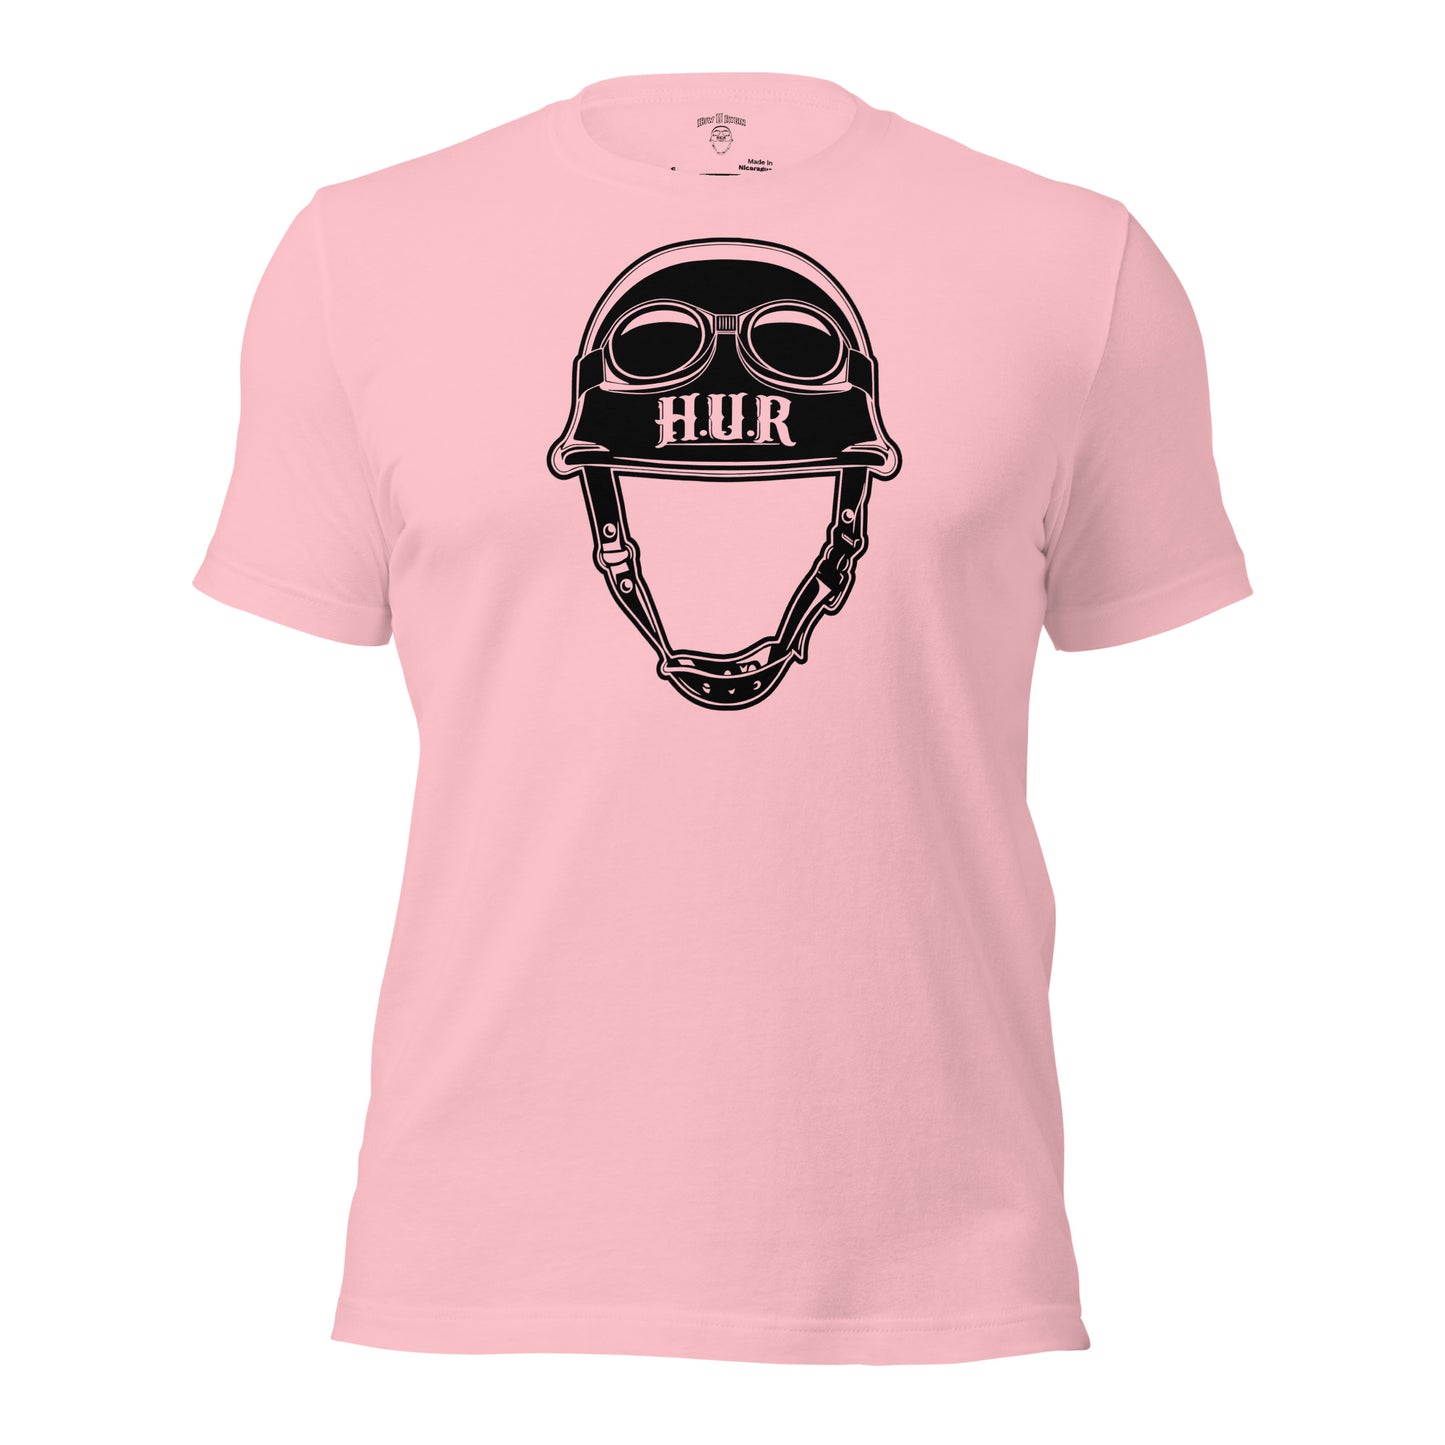 Unisex t-shirt pink